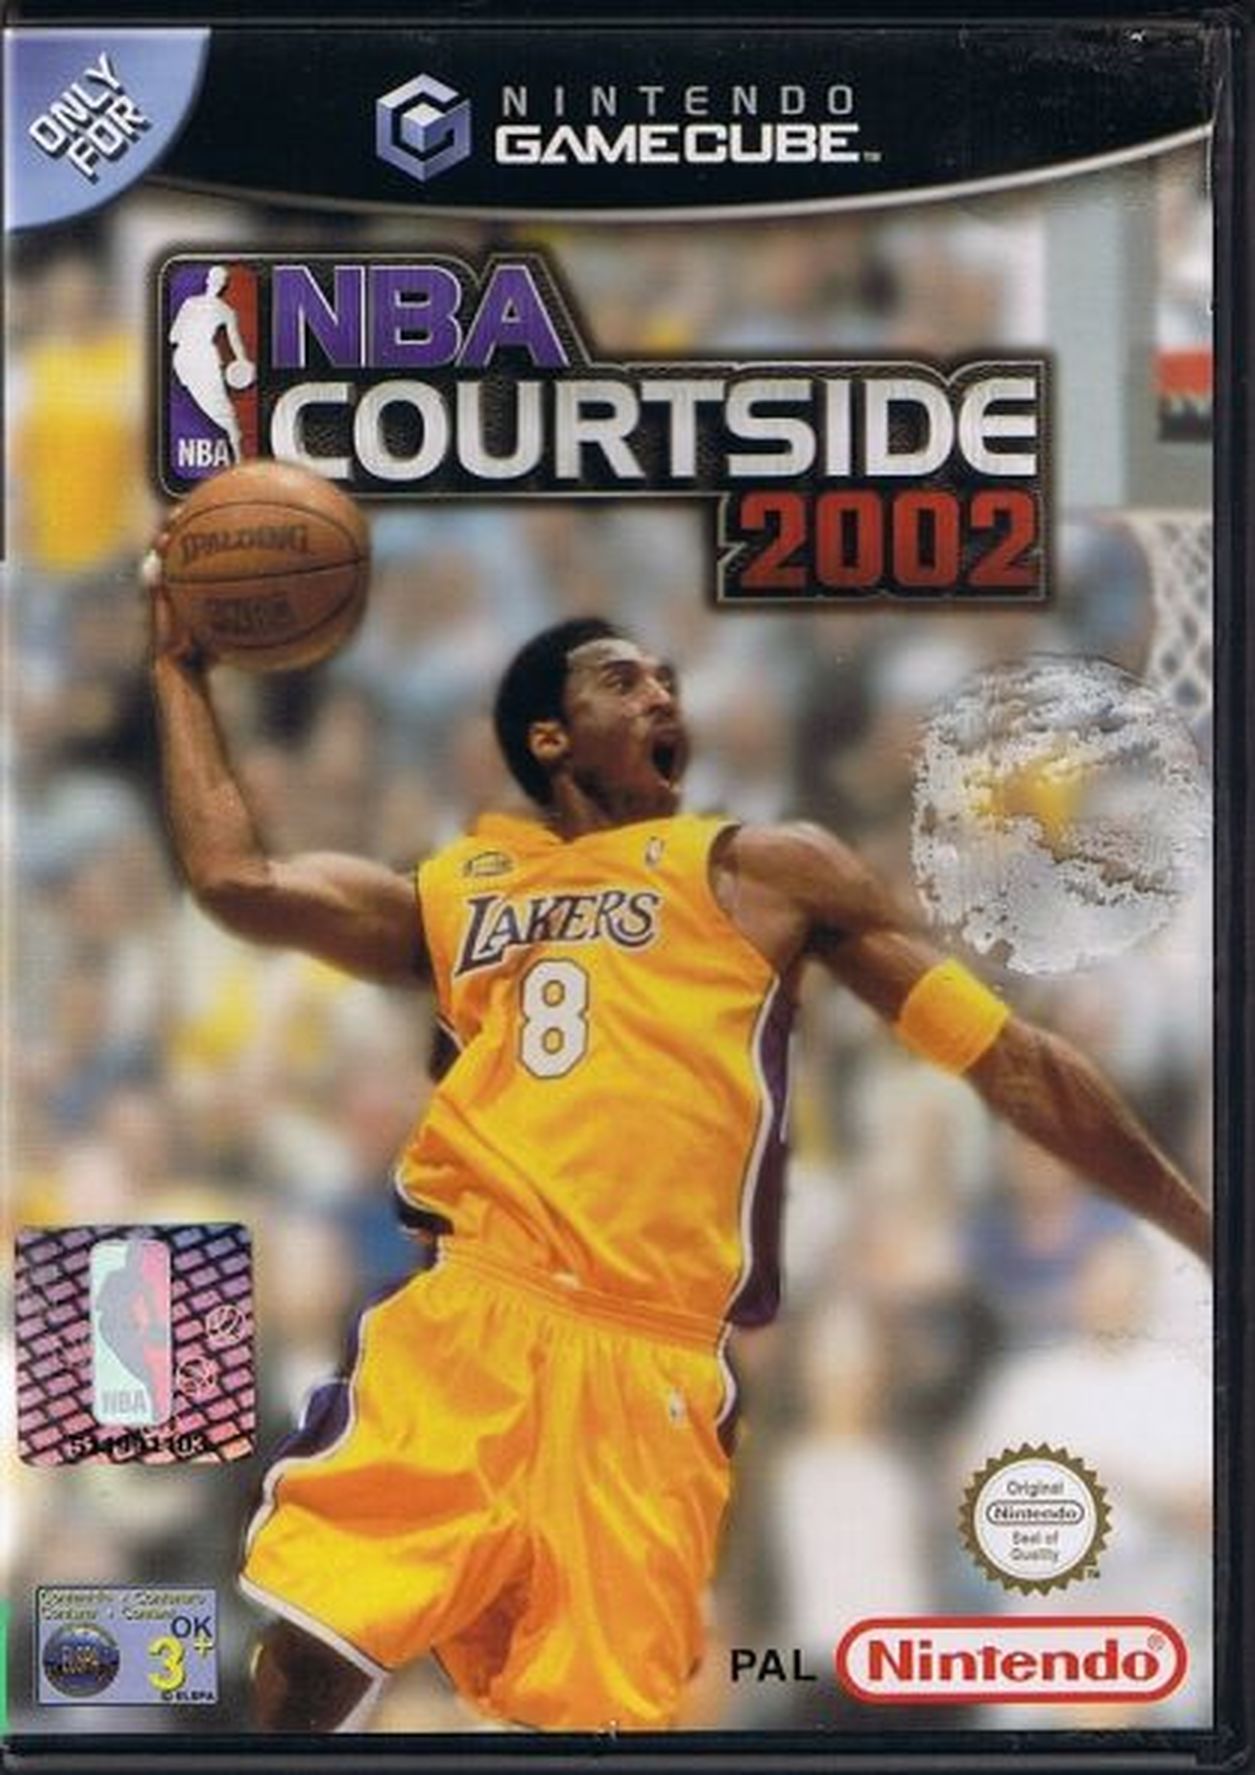 NBACourtside2002GameCube.jpg